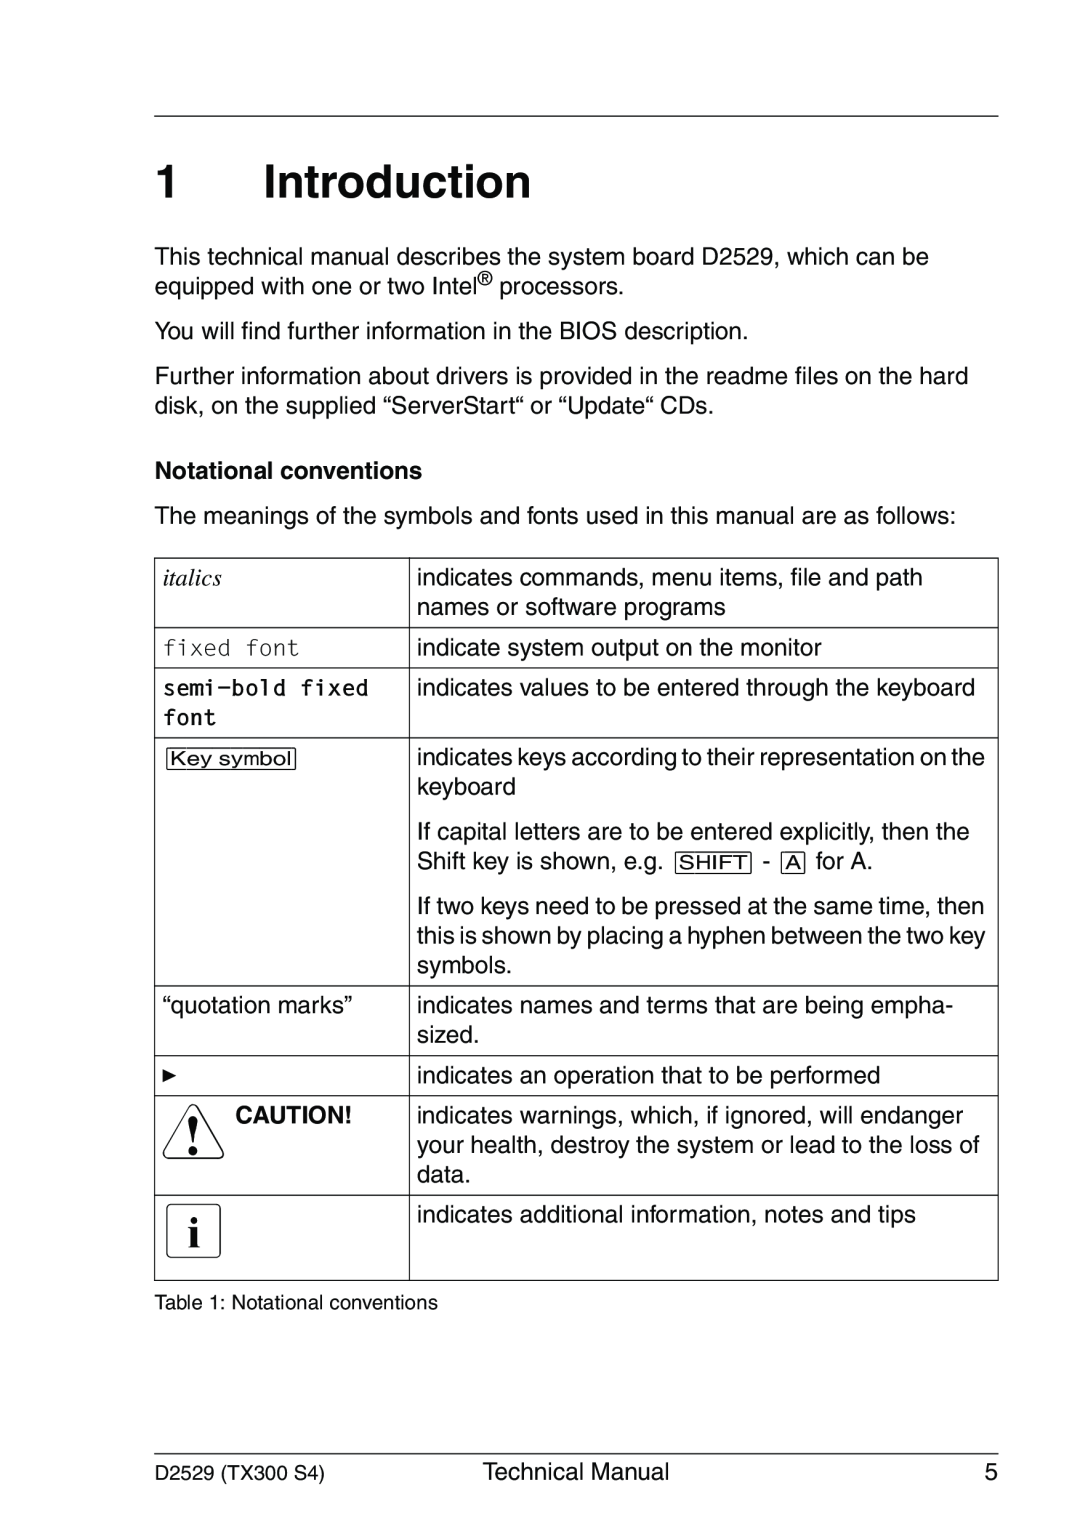 Fujitsu D2529 technical manual Introduction, Notational conventions, italics, semi-bold fixed, font 